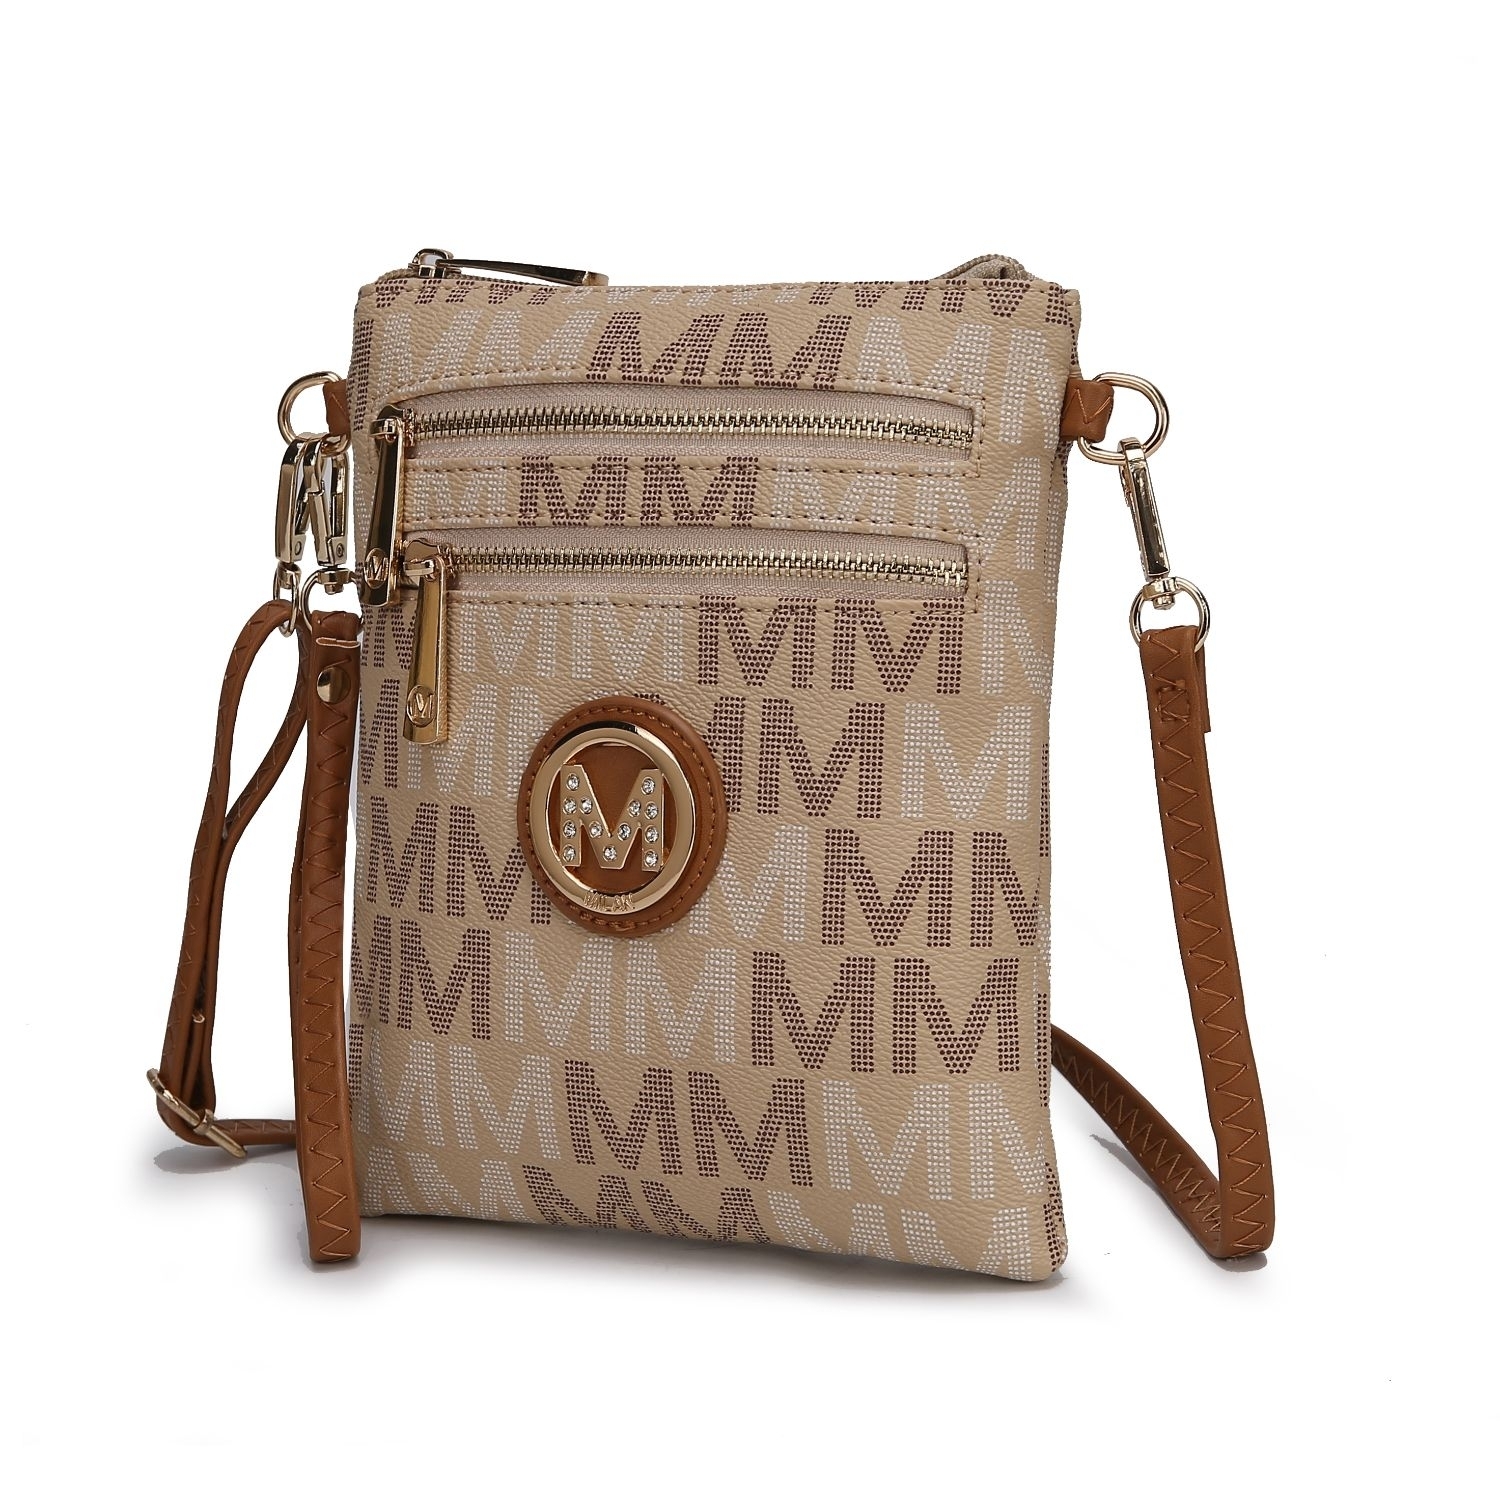 MKF Collection Gaia Milan M Signature Crossbody Handbag By Mia K - Burgundy